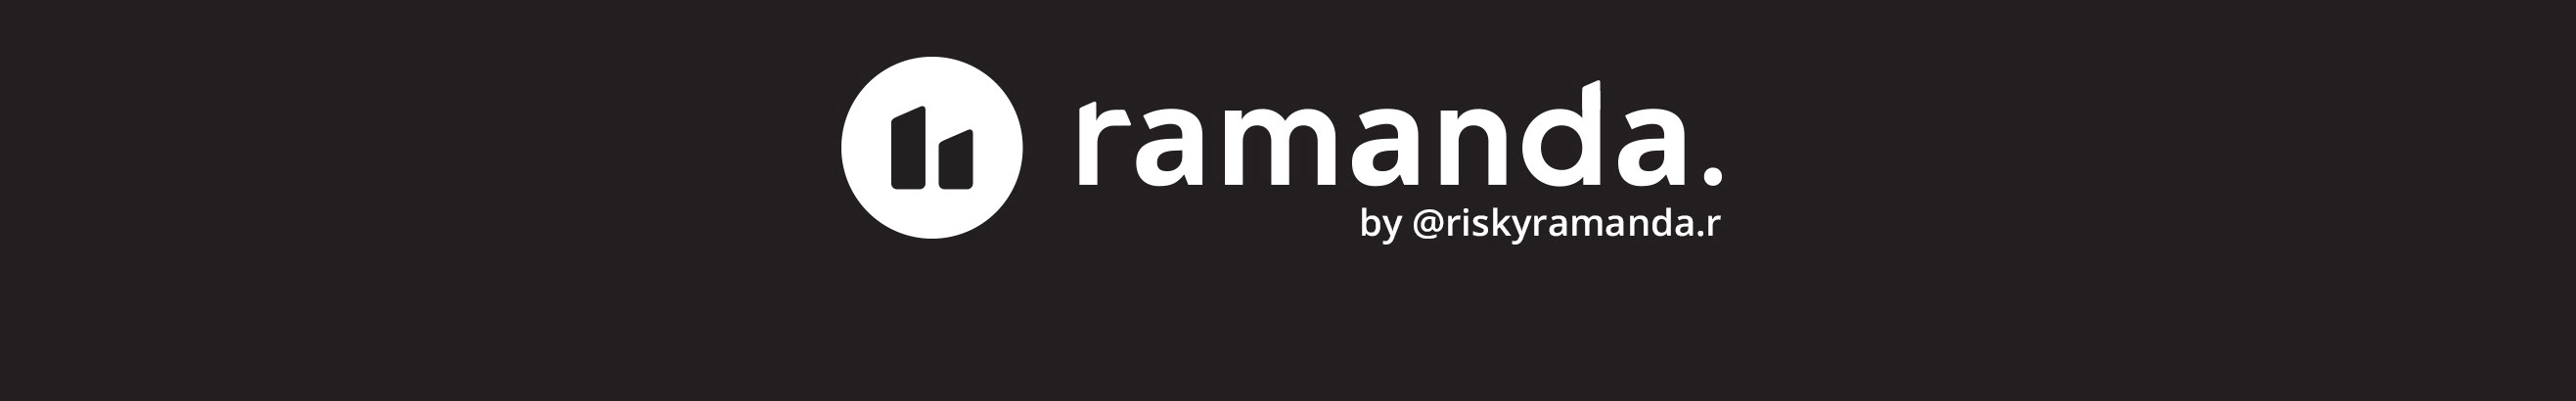 Risky Ramanda's profile banner